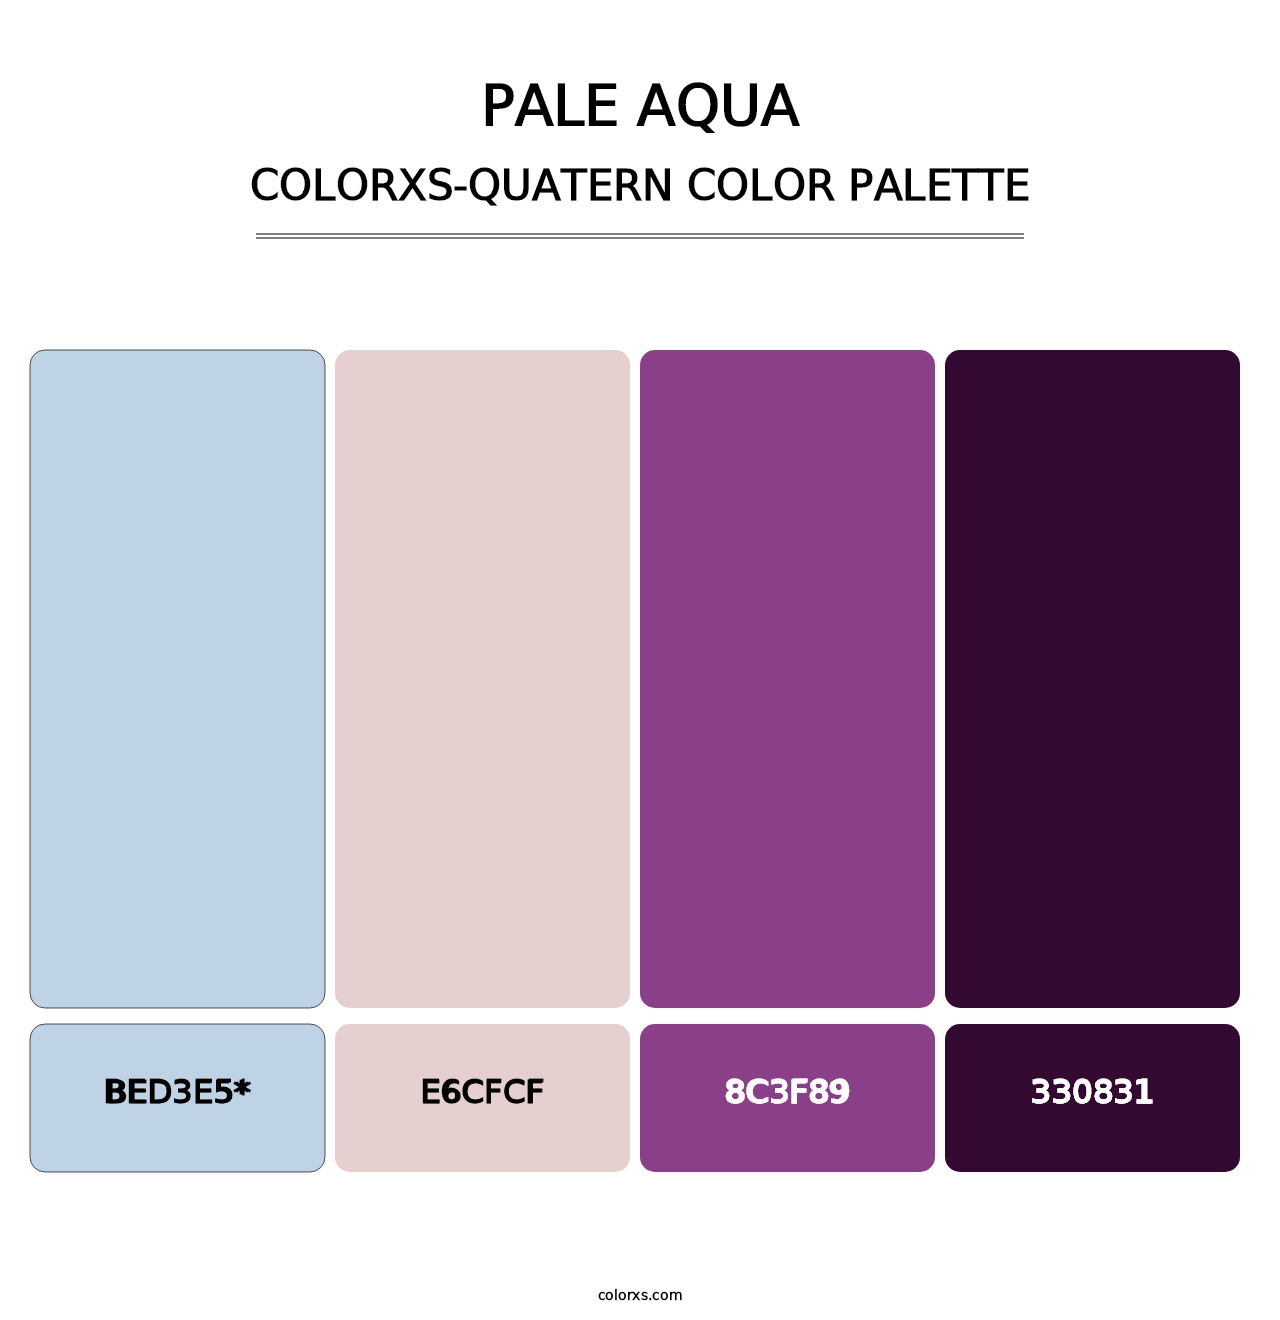 Pale Aqua - Colorxs Quatern Palette